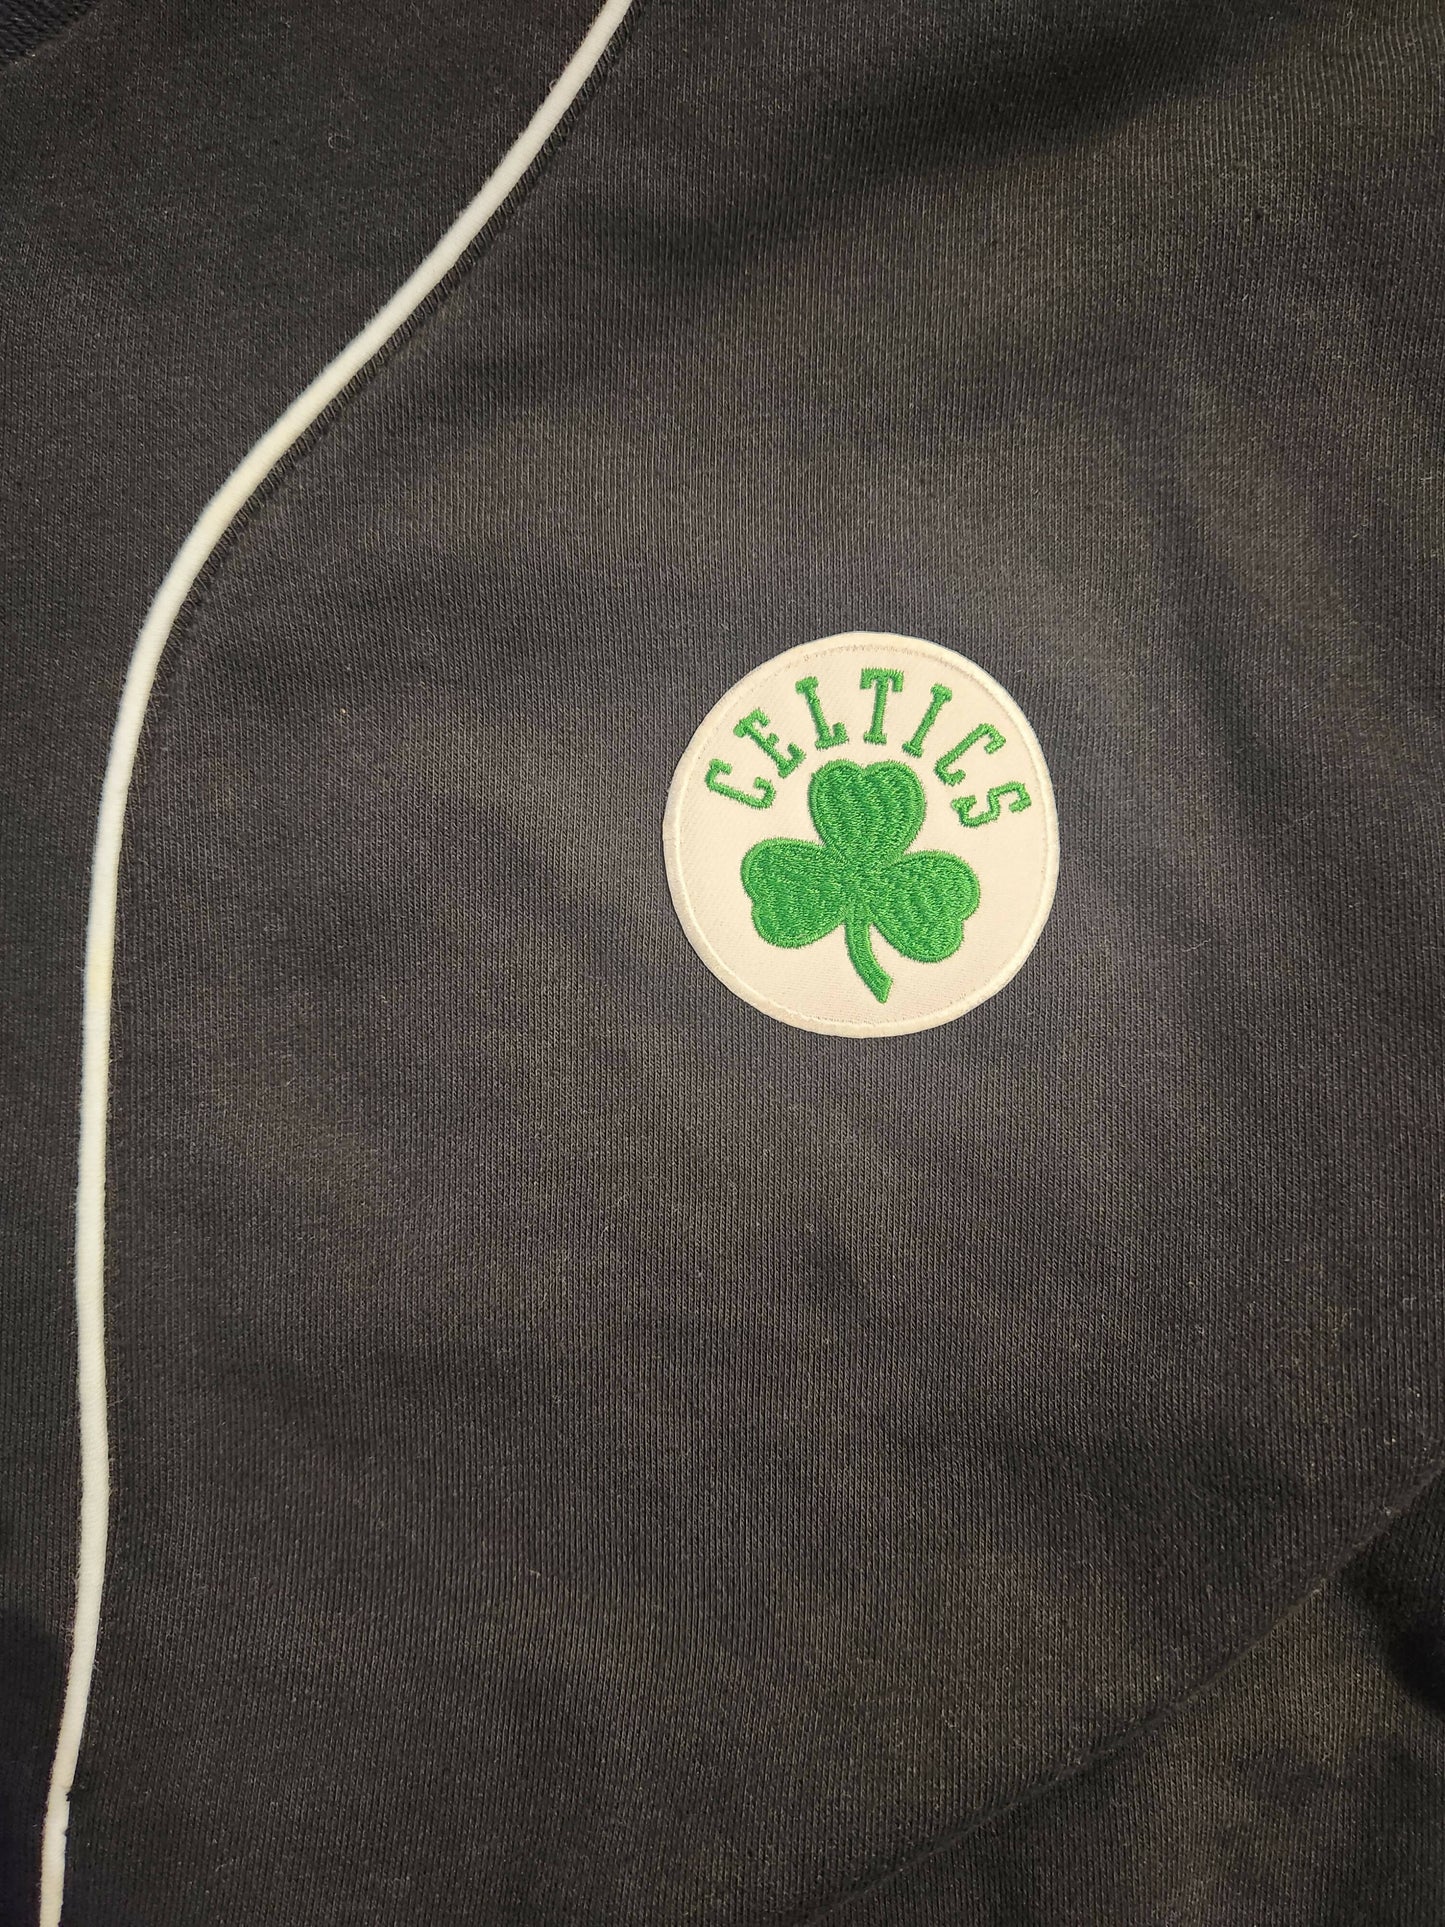 Celtics Baseball Shirt